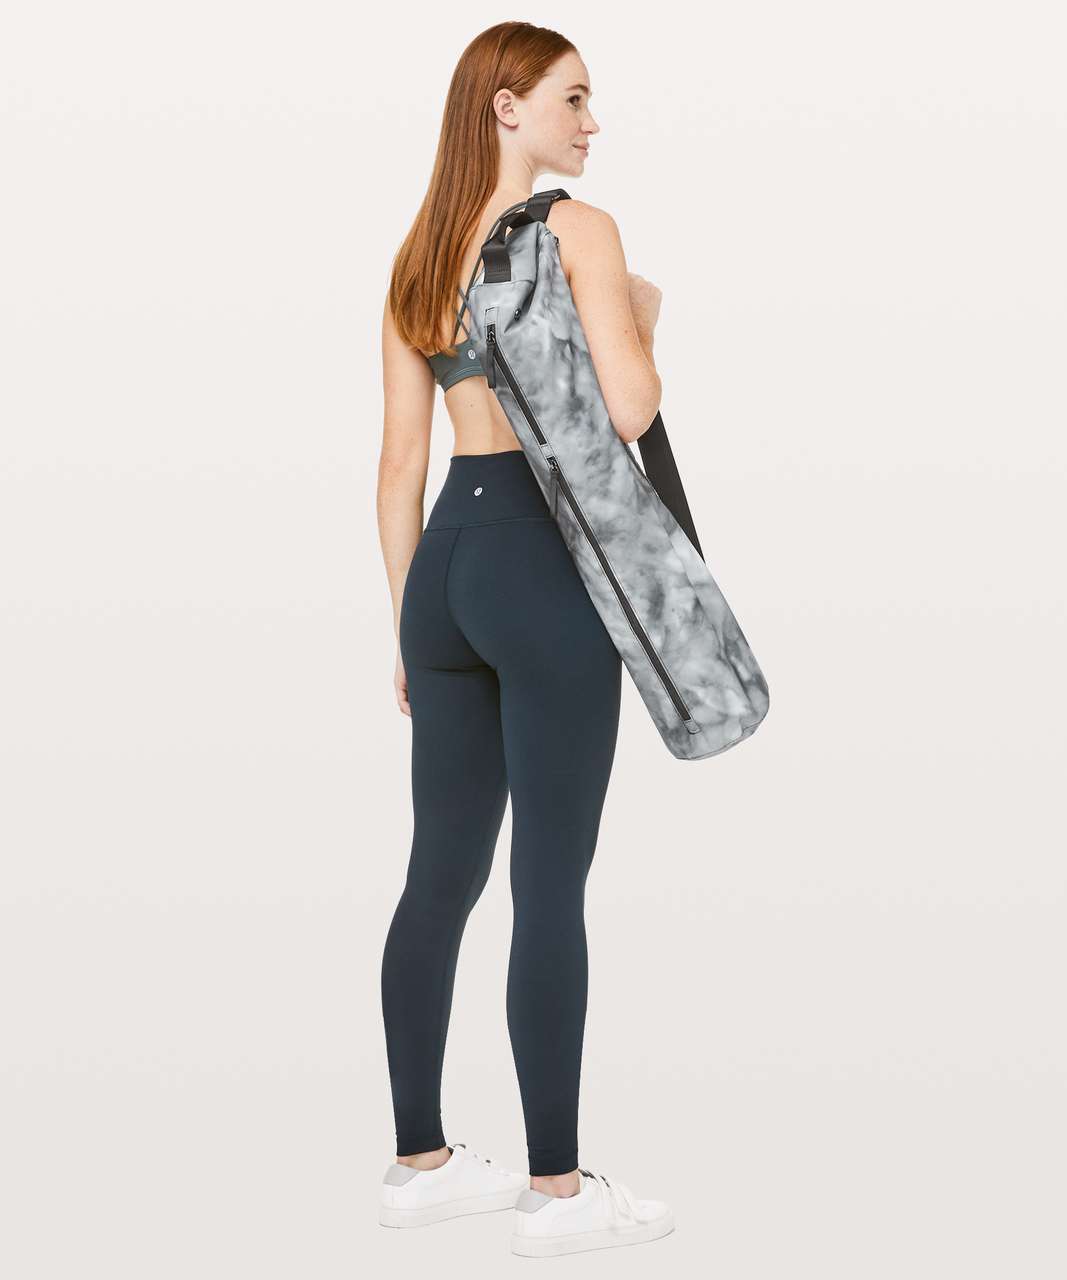 Lululemon Get Rolling Yoga Mat Bag *17L - Spray Dye Grey Multi / Black